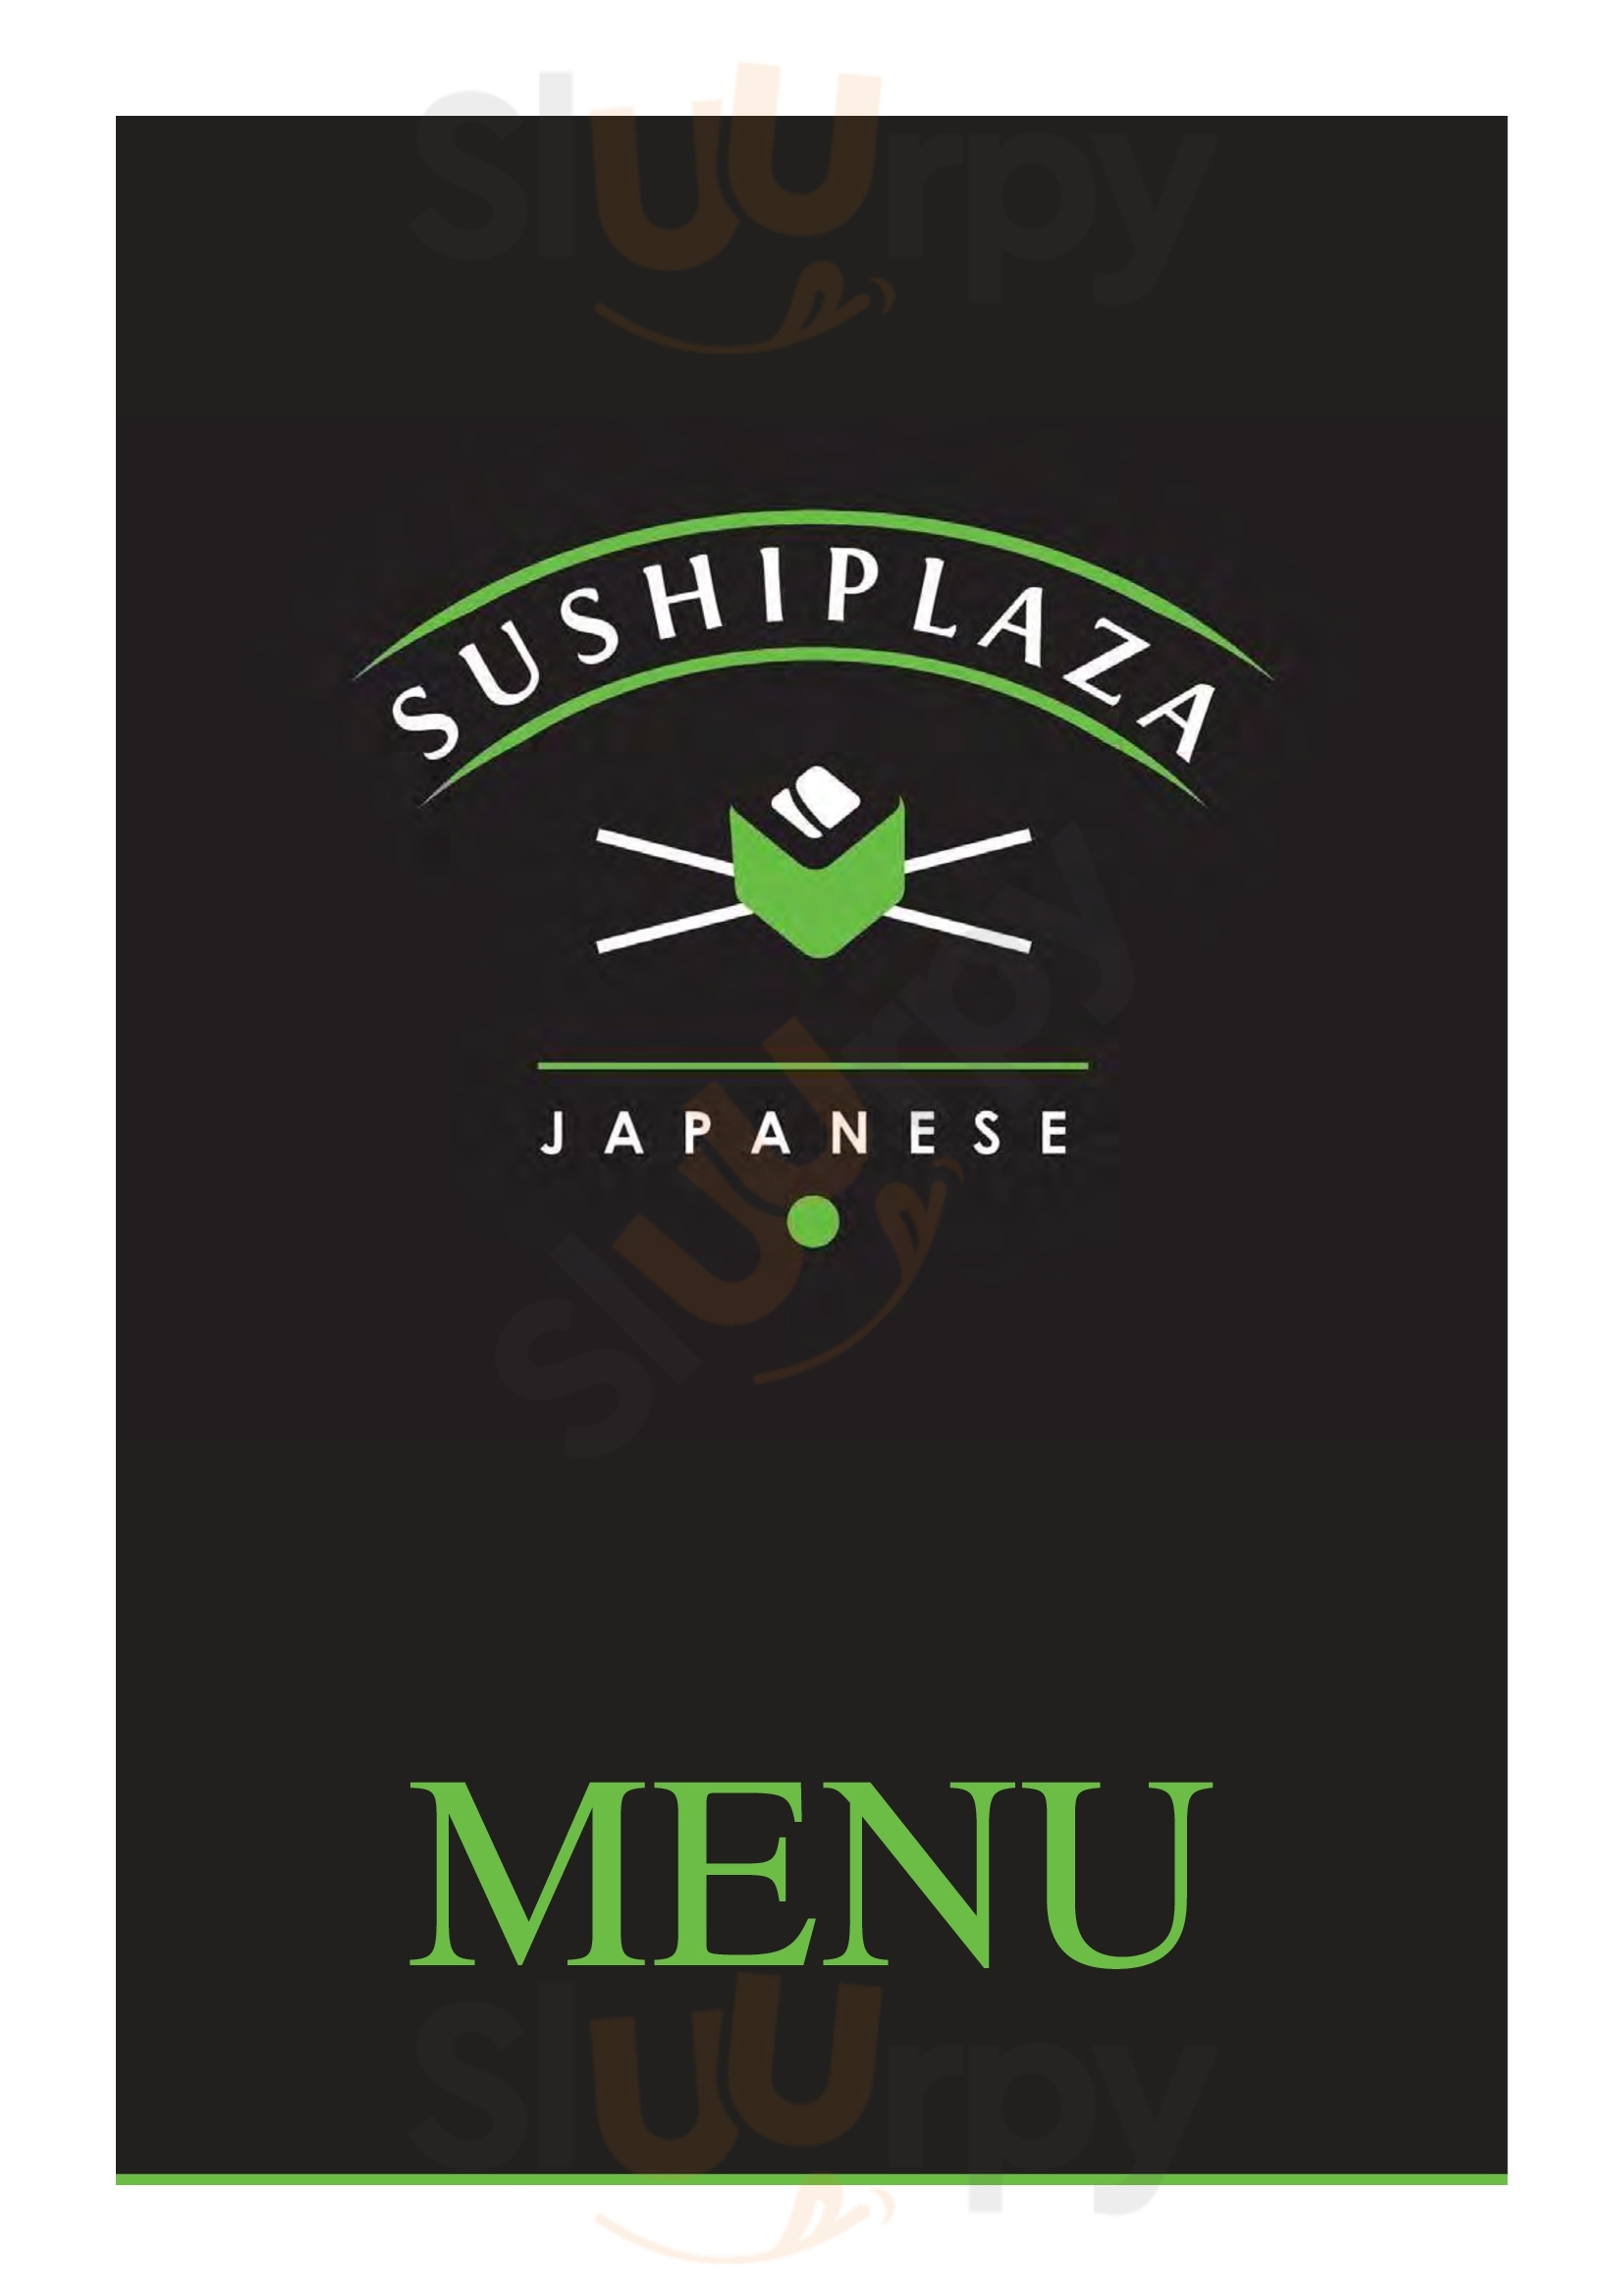 Sushi Plaza Gand Menu - 1